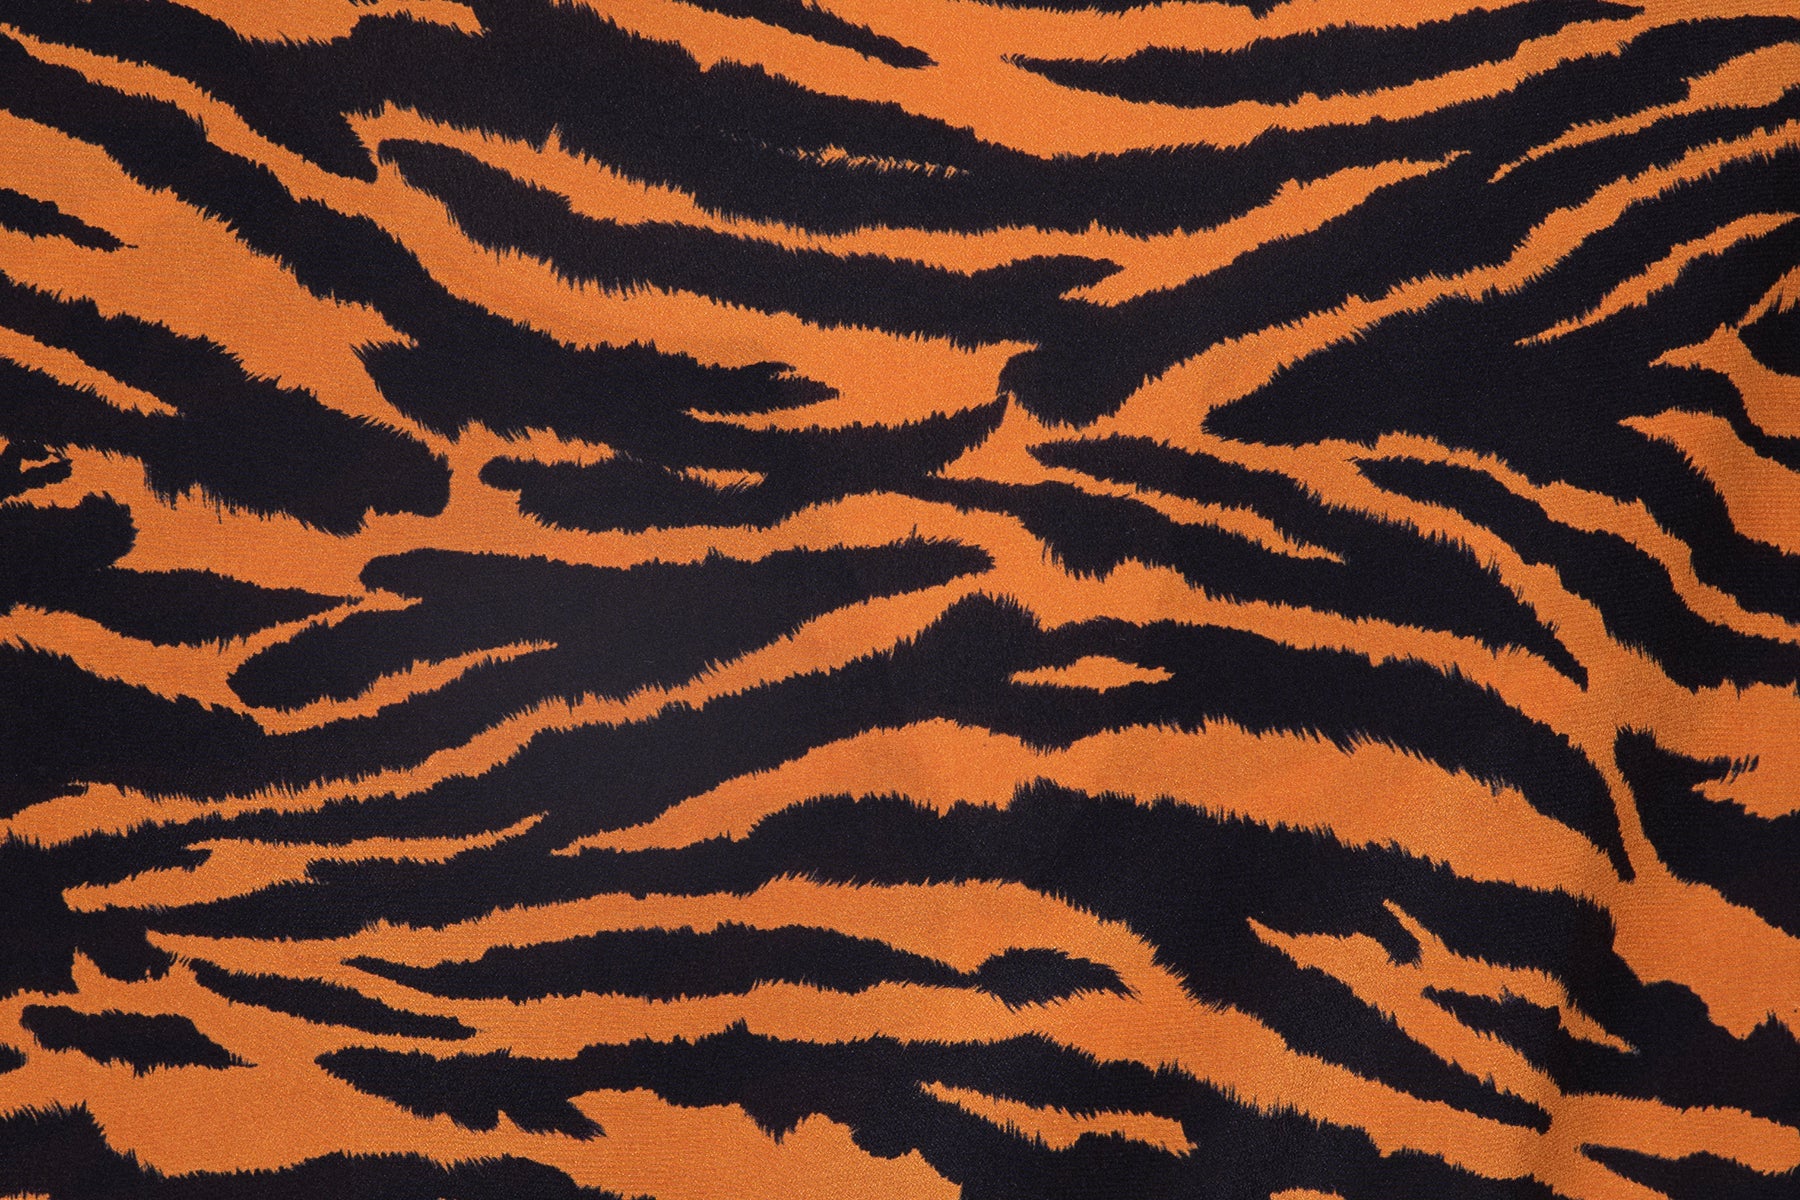 Princeton Panthera Tigris Italian Silk Short Kaftan